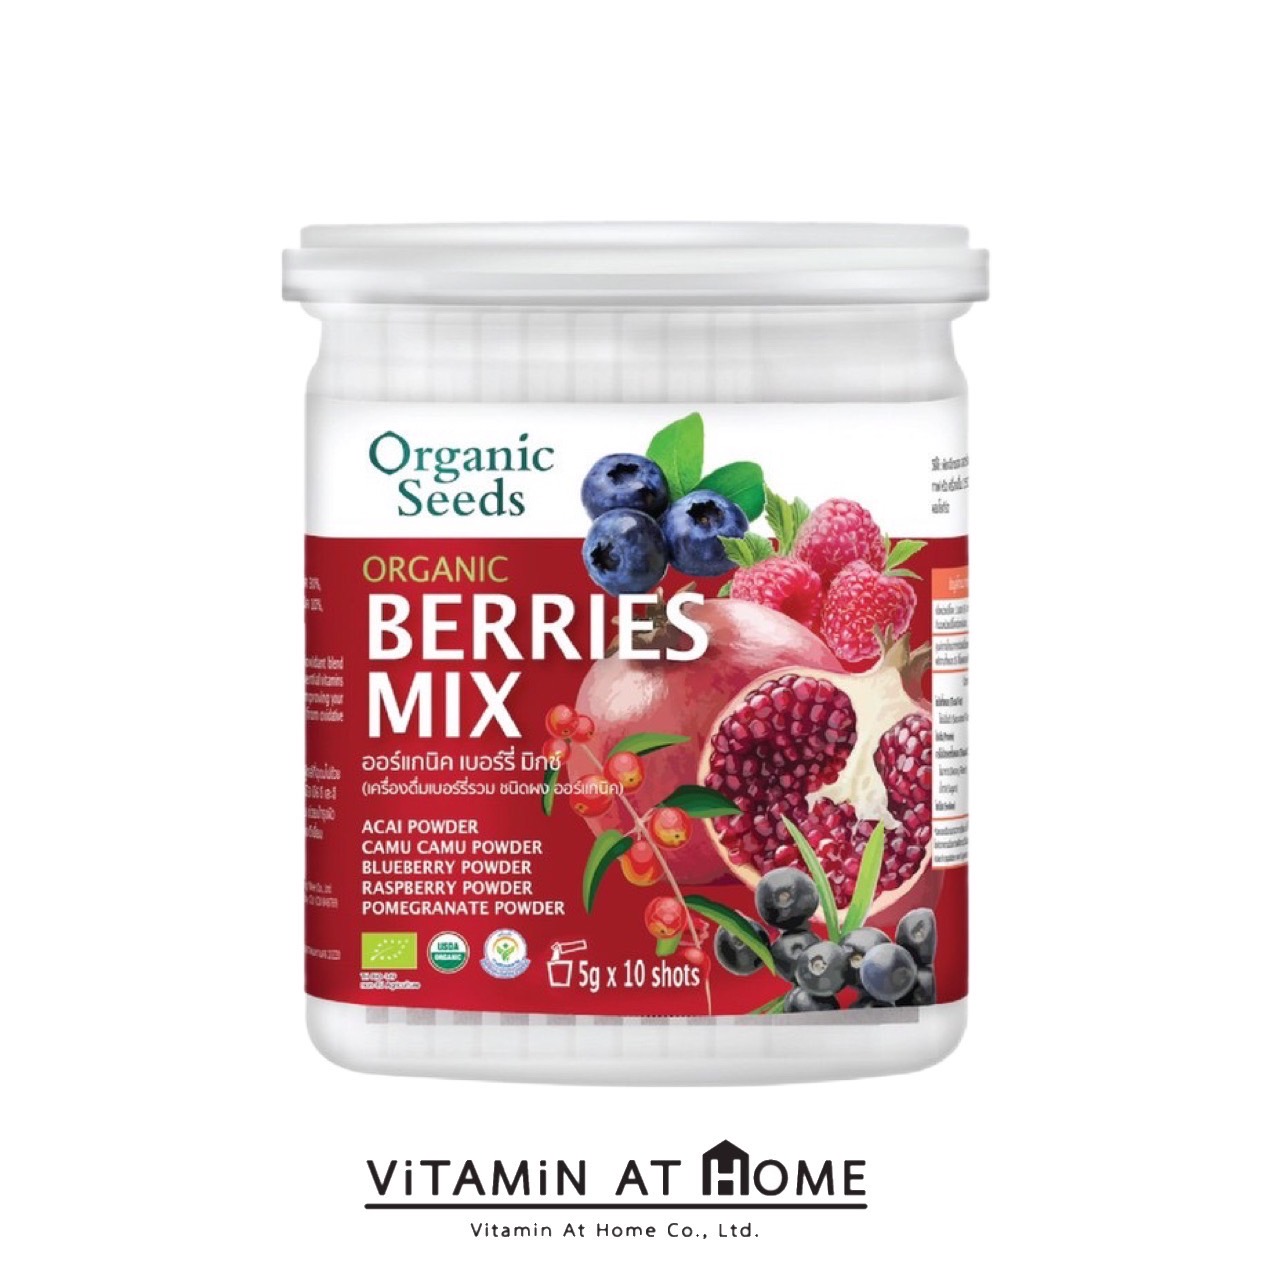 Organic Berries Mix 50g/ ออร์แกนิค เบอร์รี่ มิกซ์ 50 กรัม